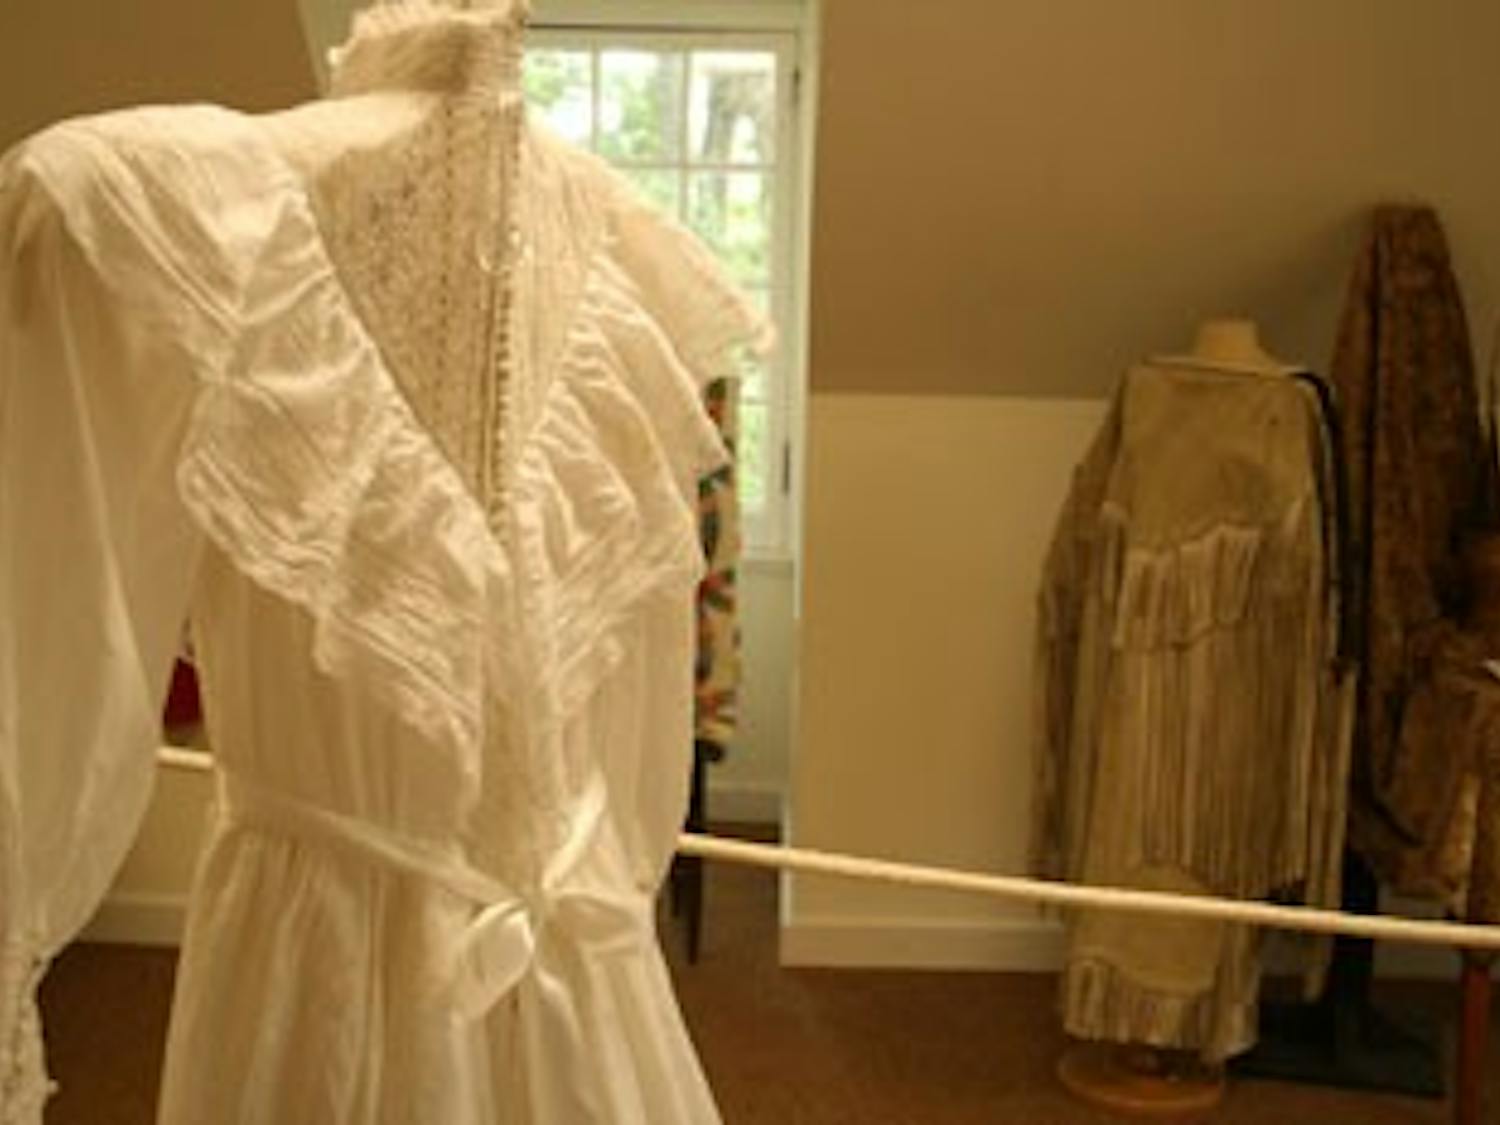 The “Orange County Brides” exhibit, showcasing wedding dresses, will run at the Orange County Historical Museum.